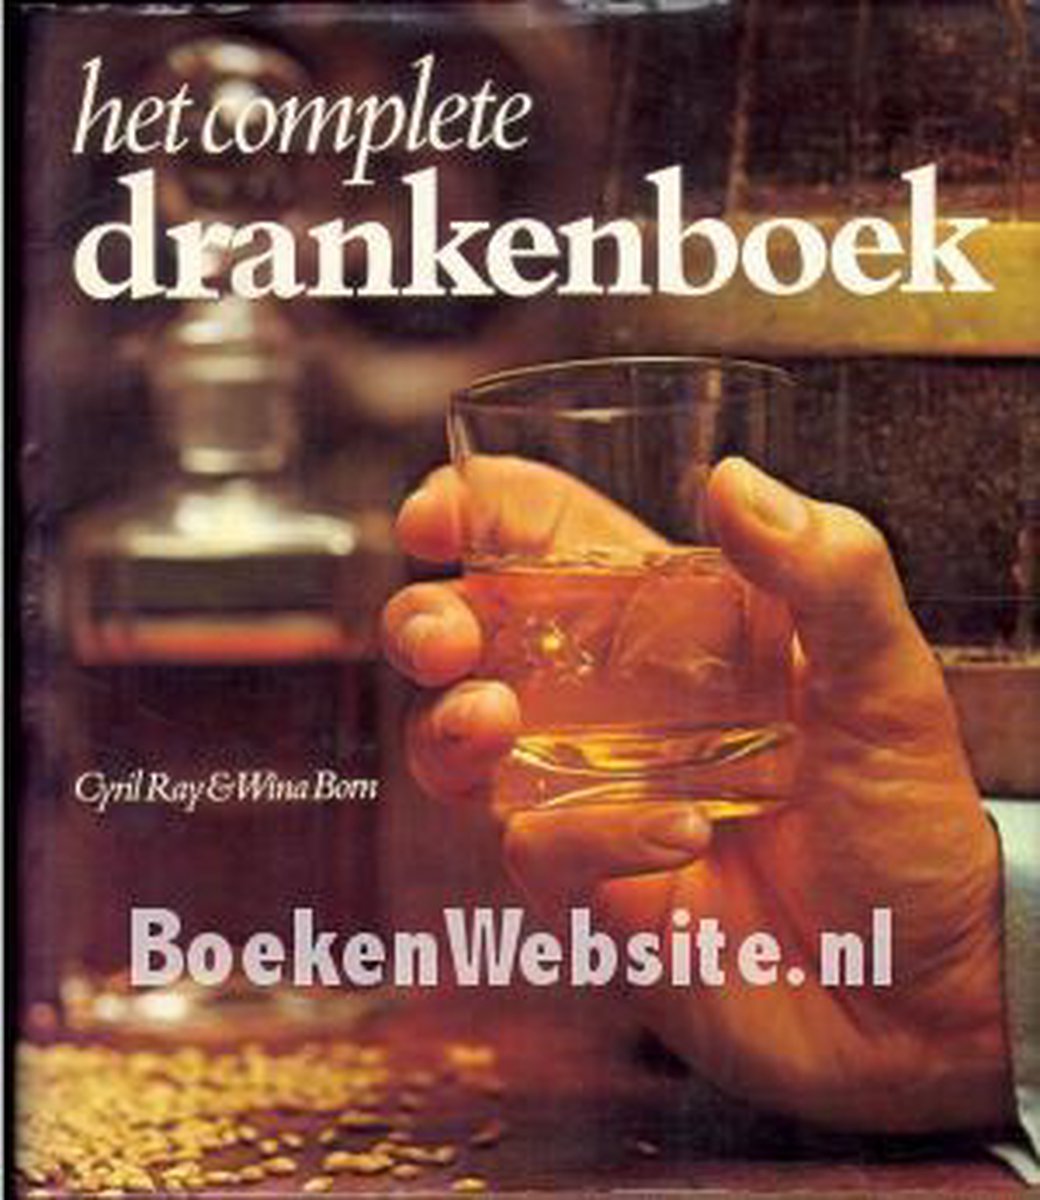 Complete drankenboek